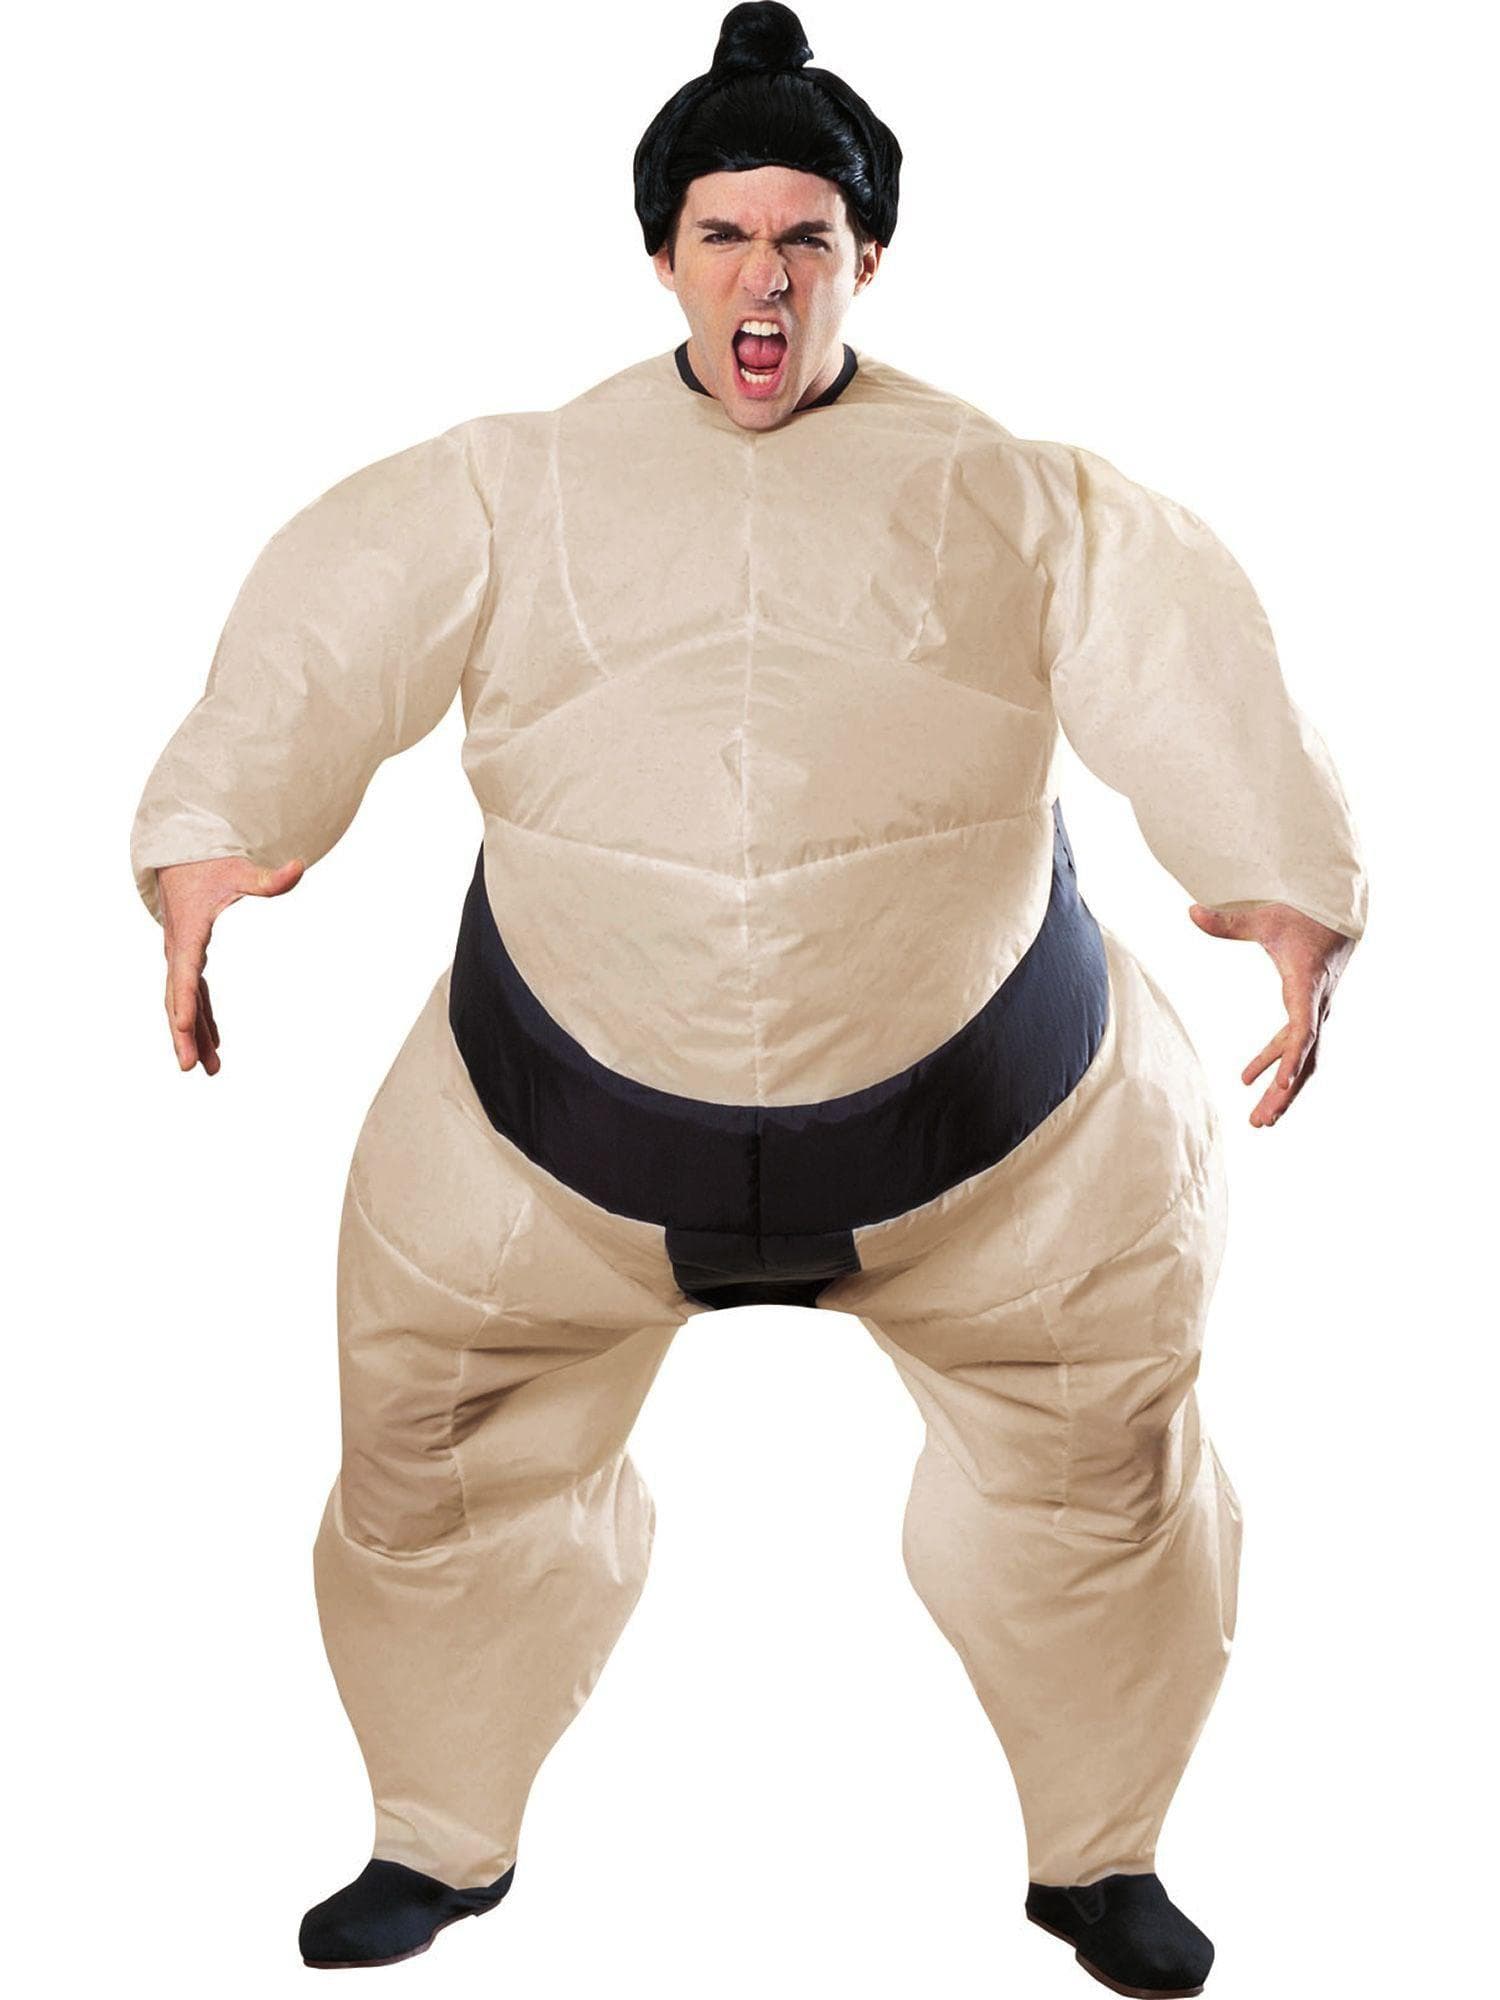 Adult Inflatable Sumo Costume - costumes.com